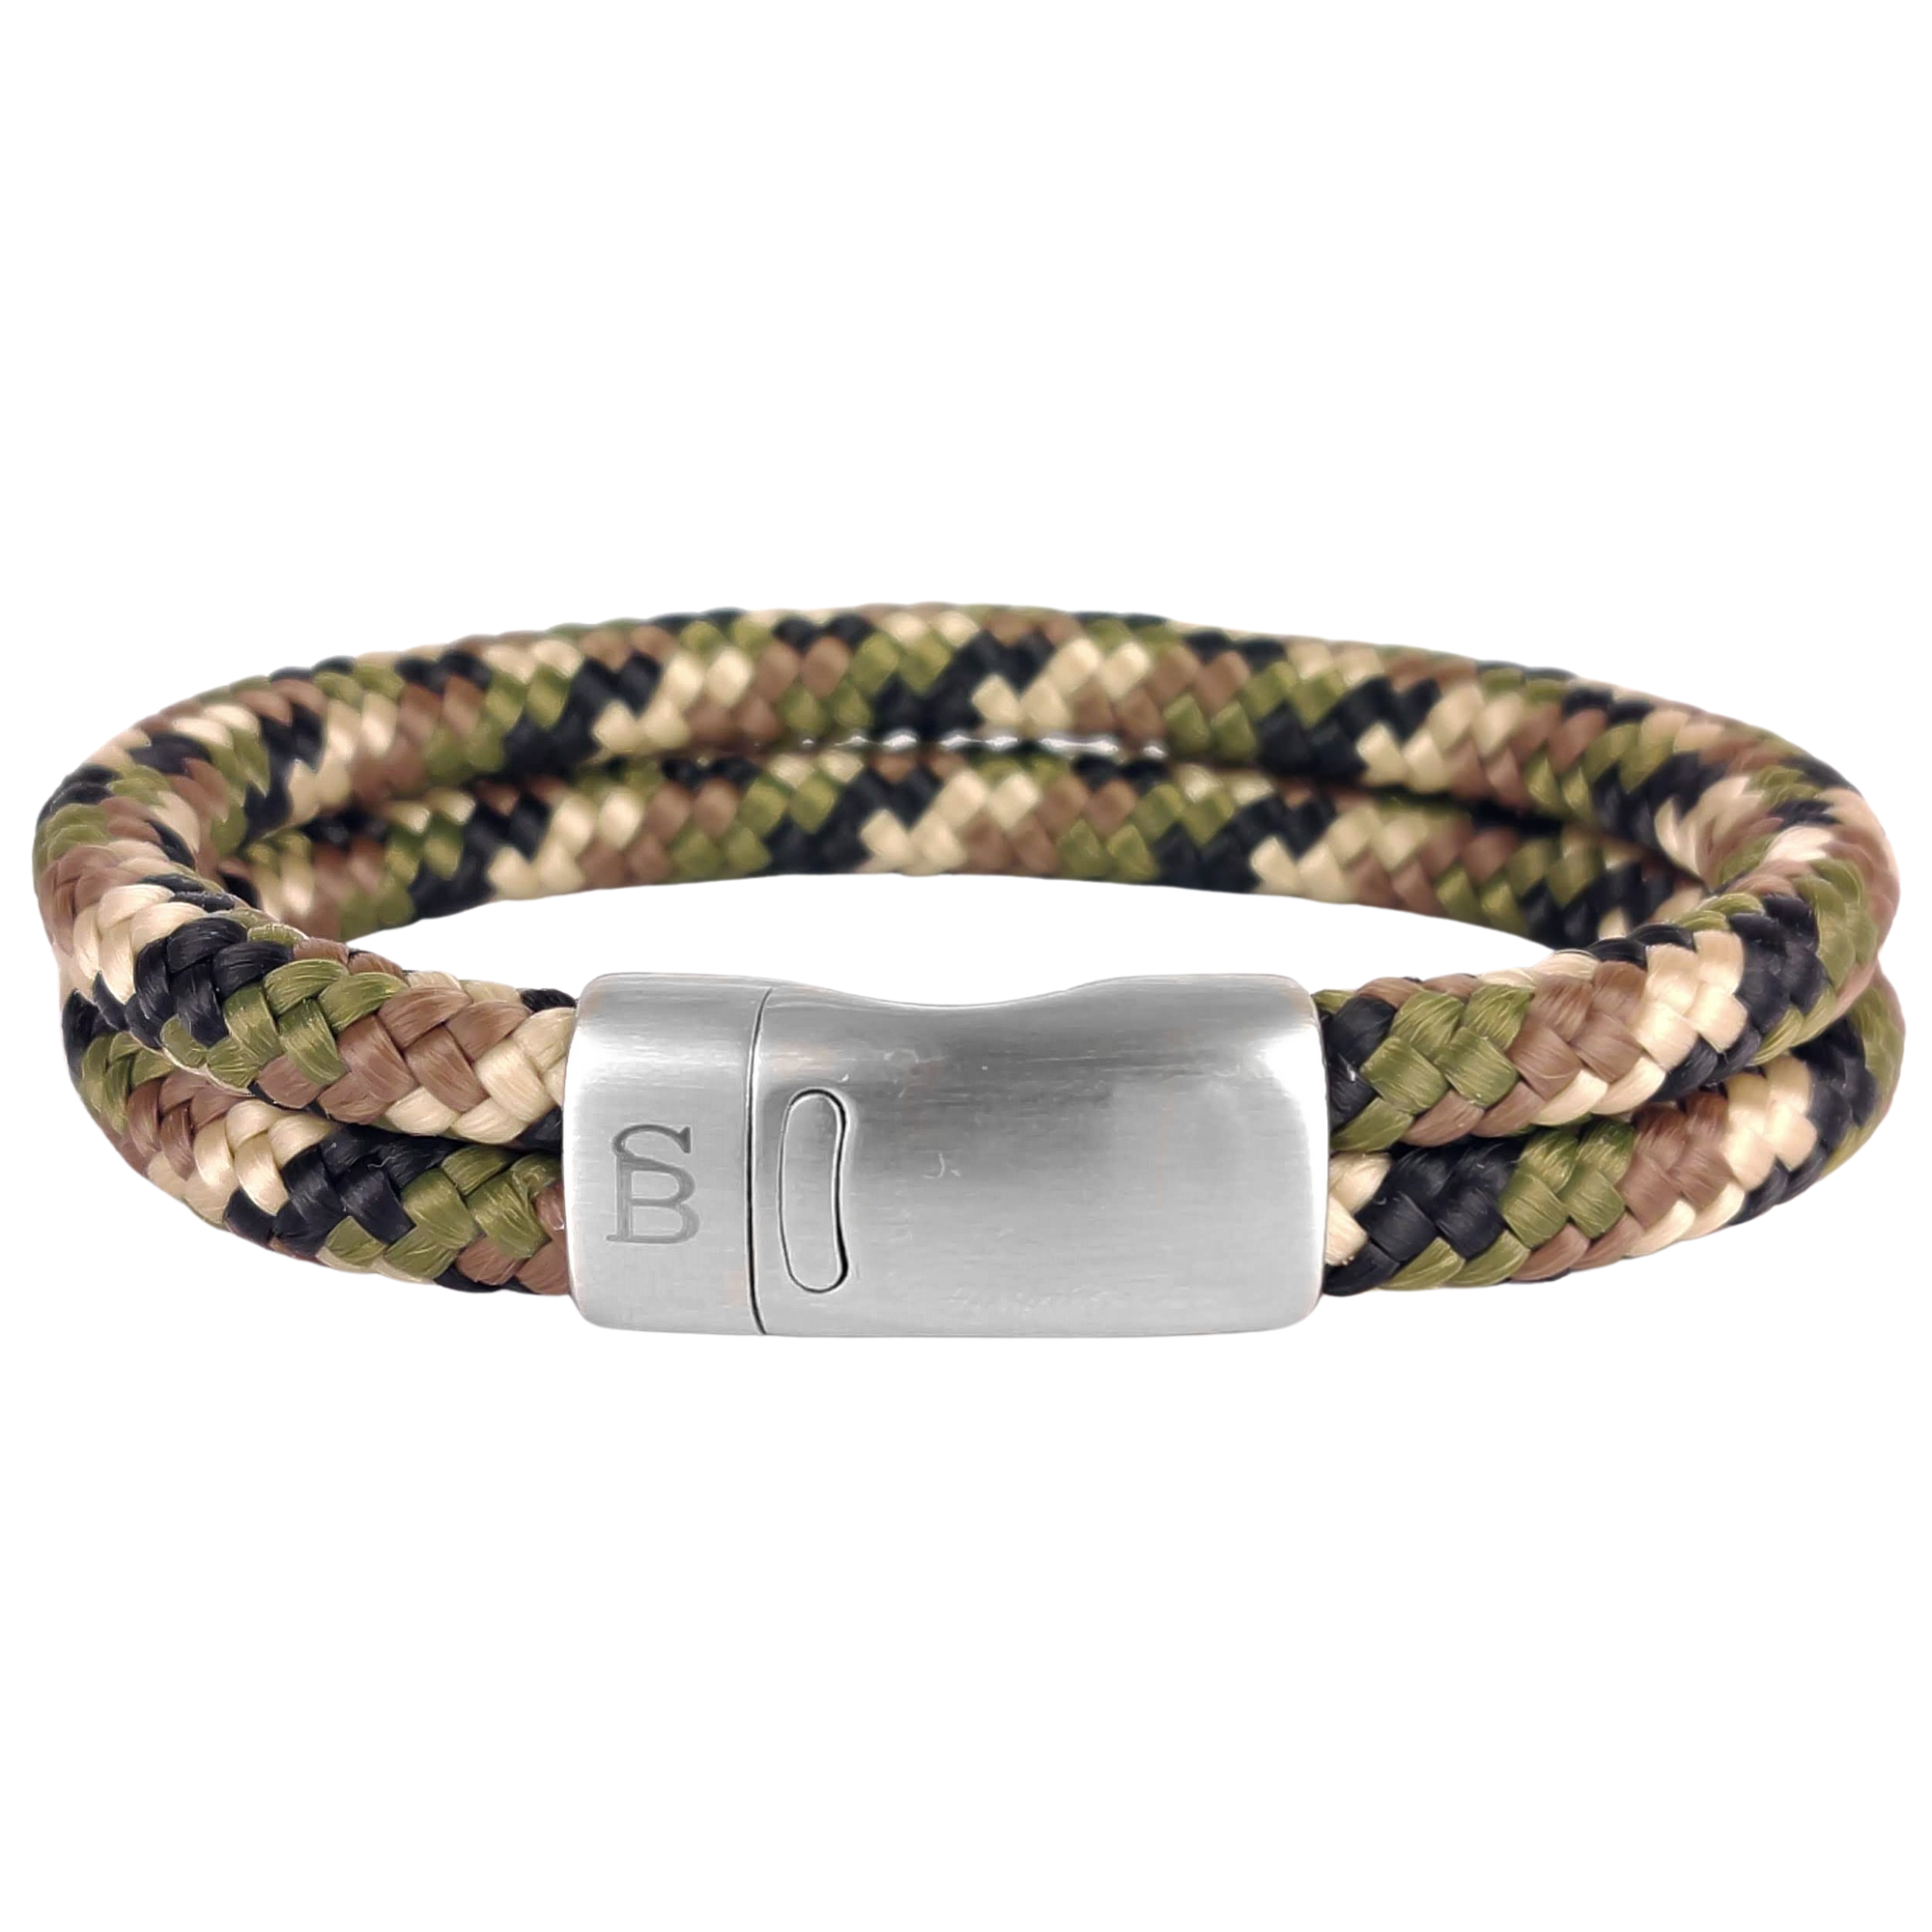 Lake armband RBL01 camouflage - Steel & Barnett